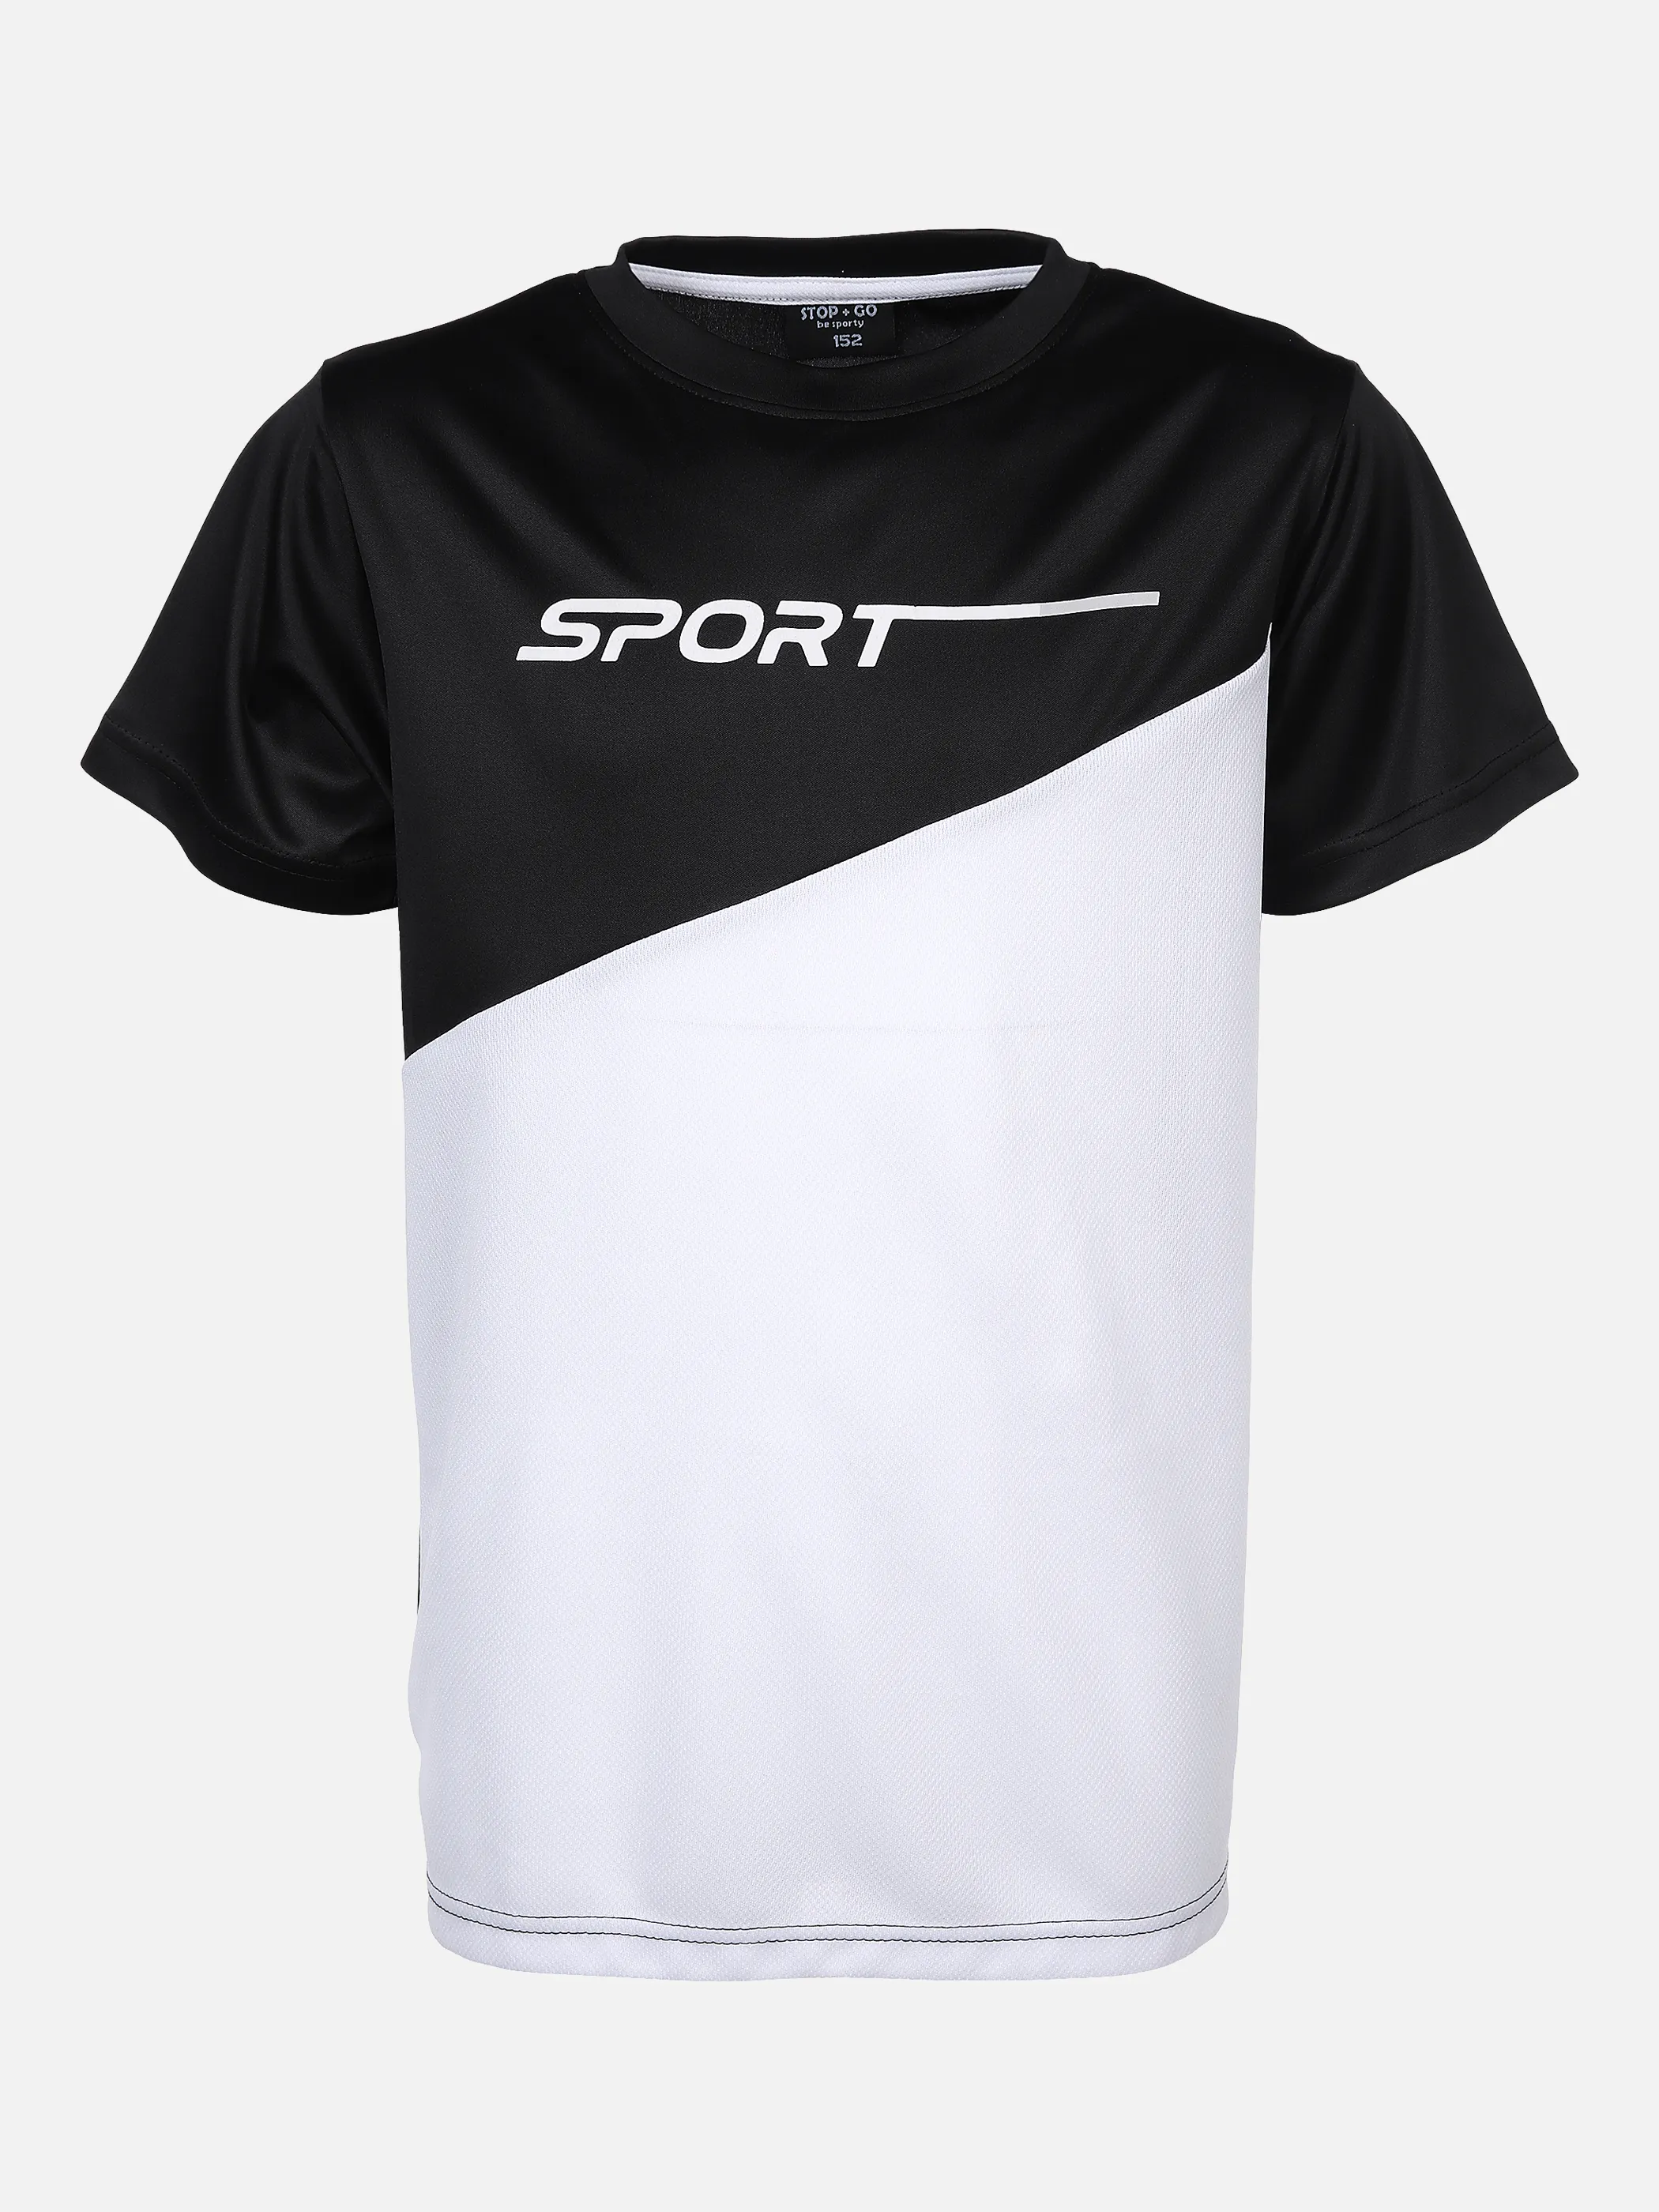 Stop + Go Kn-Sport-T-Shirt Schwarz 863116 SCHWARZ/WE 1